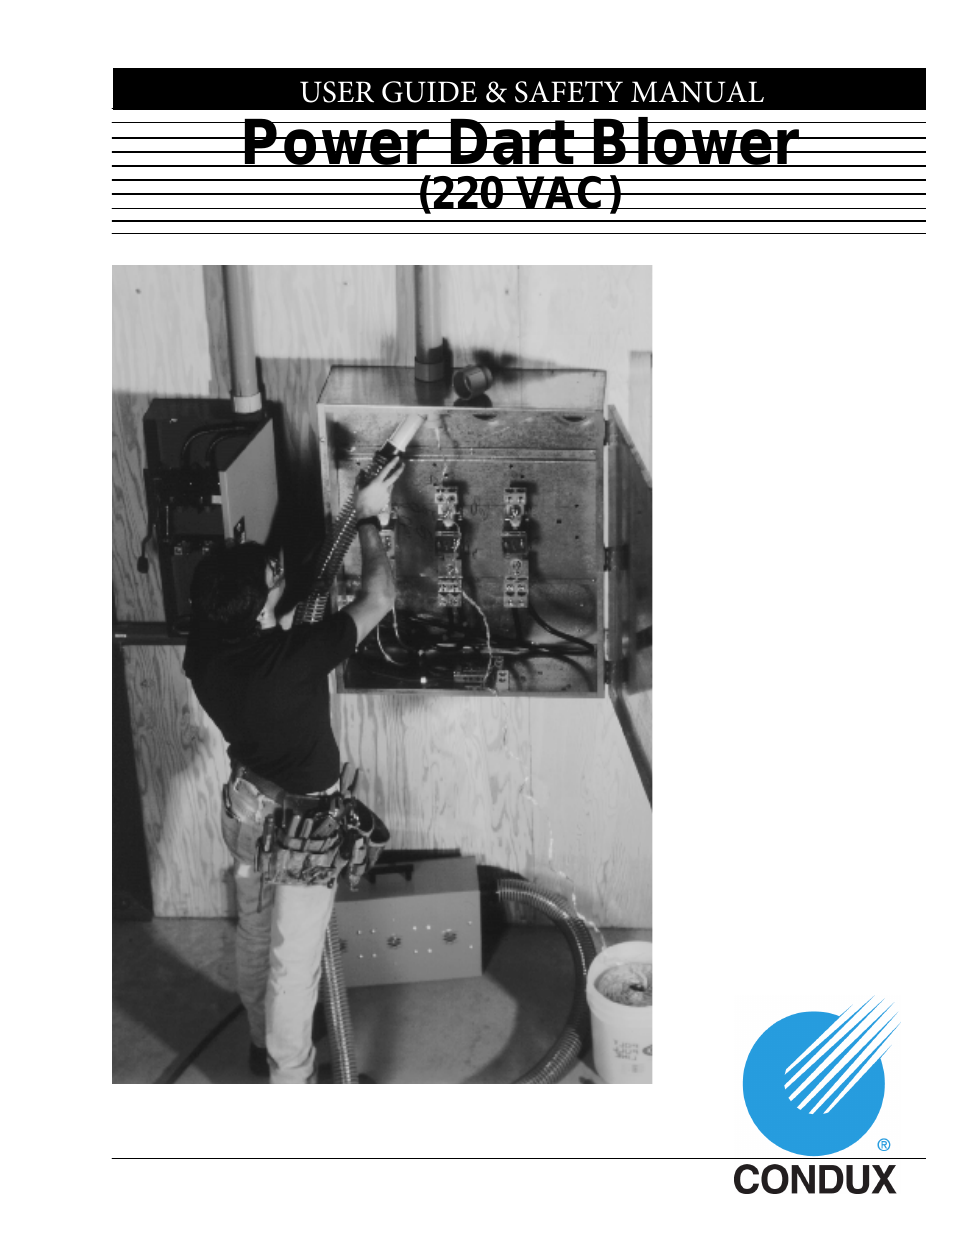 Power Dart Blower 220 VAC